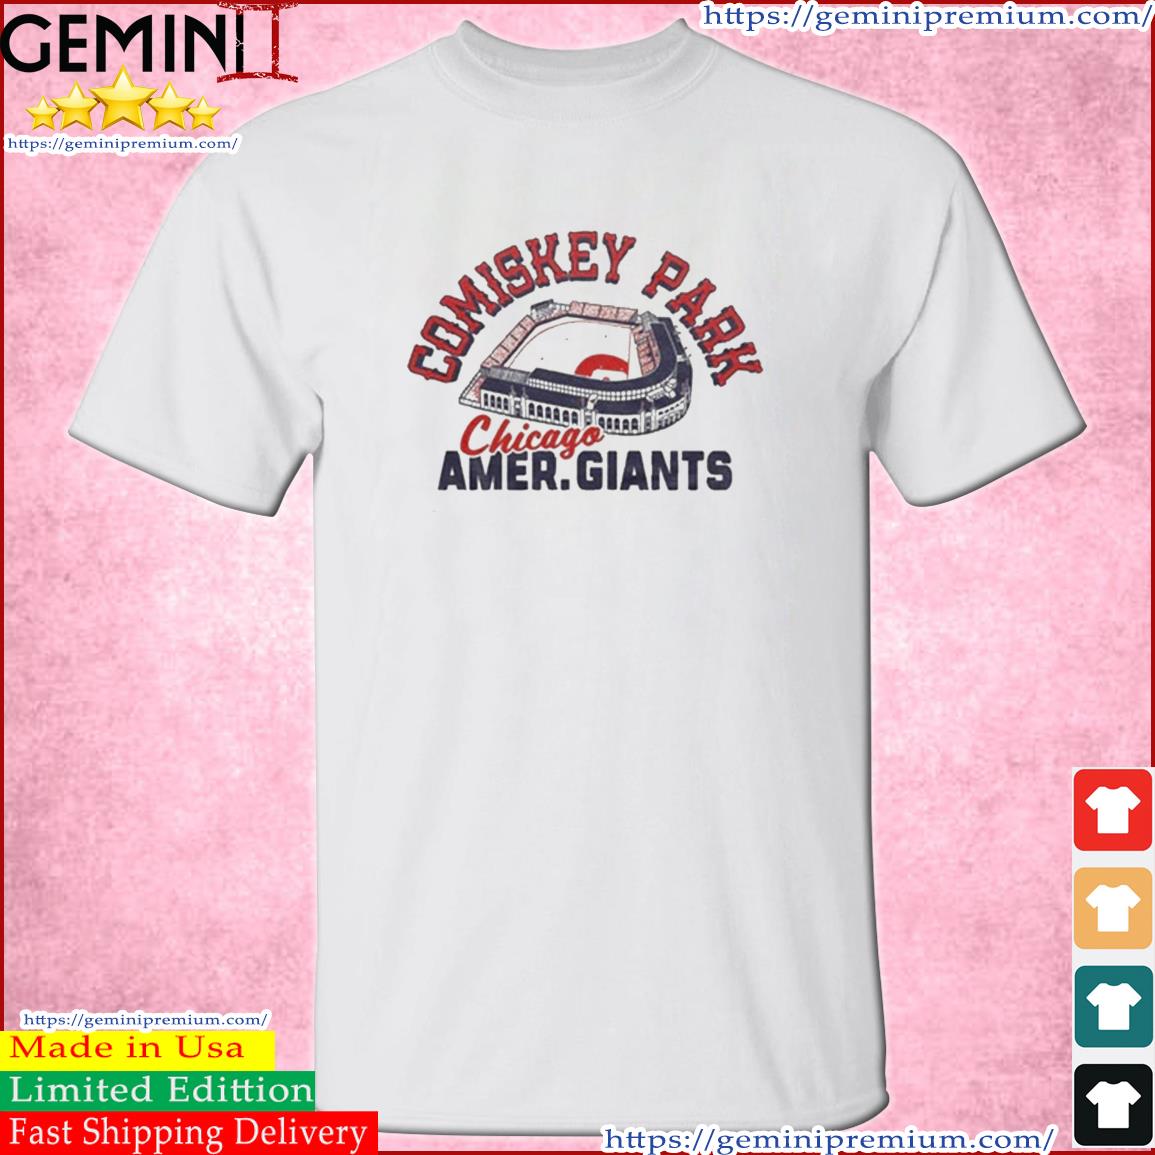 Comiskey Park Chicago Amer. Giants shirt